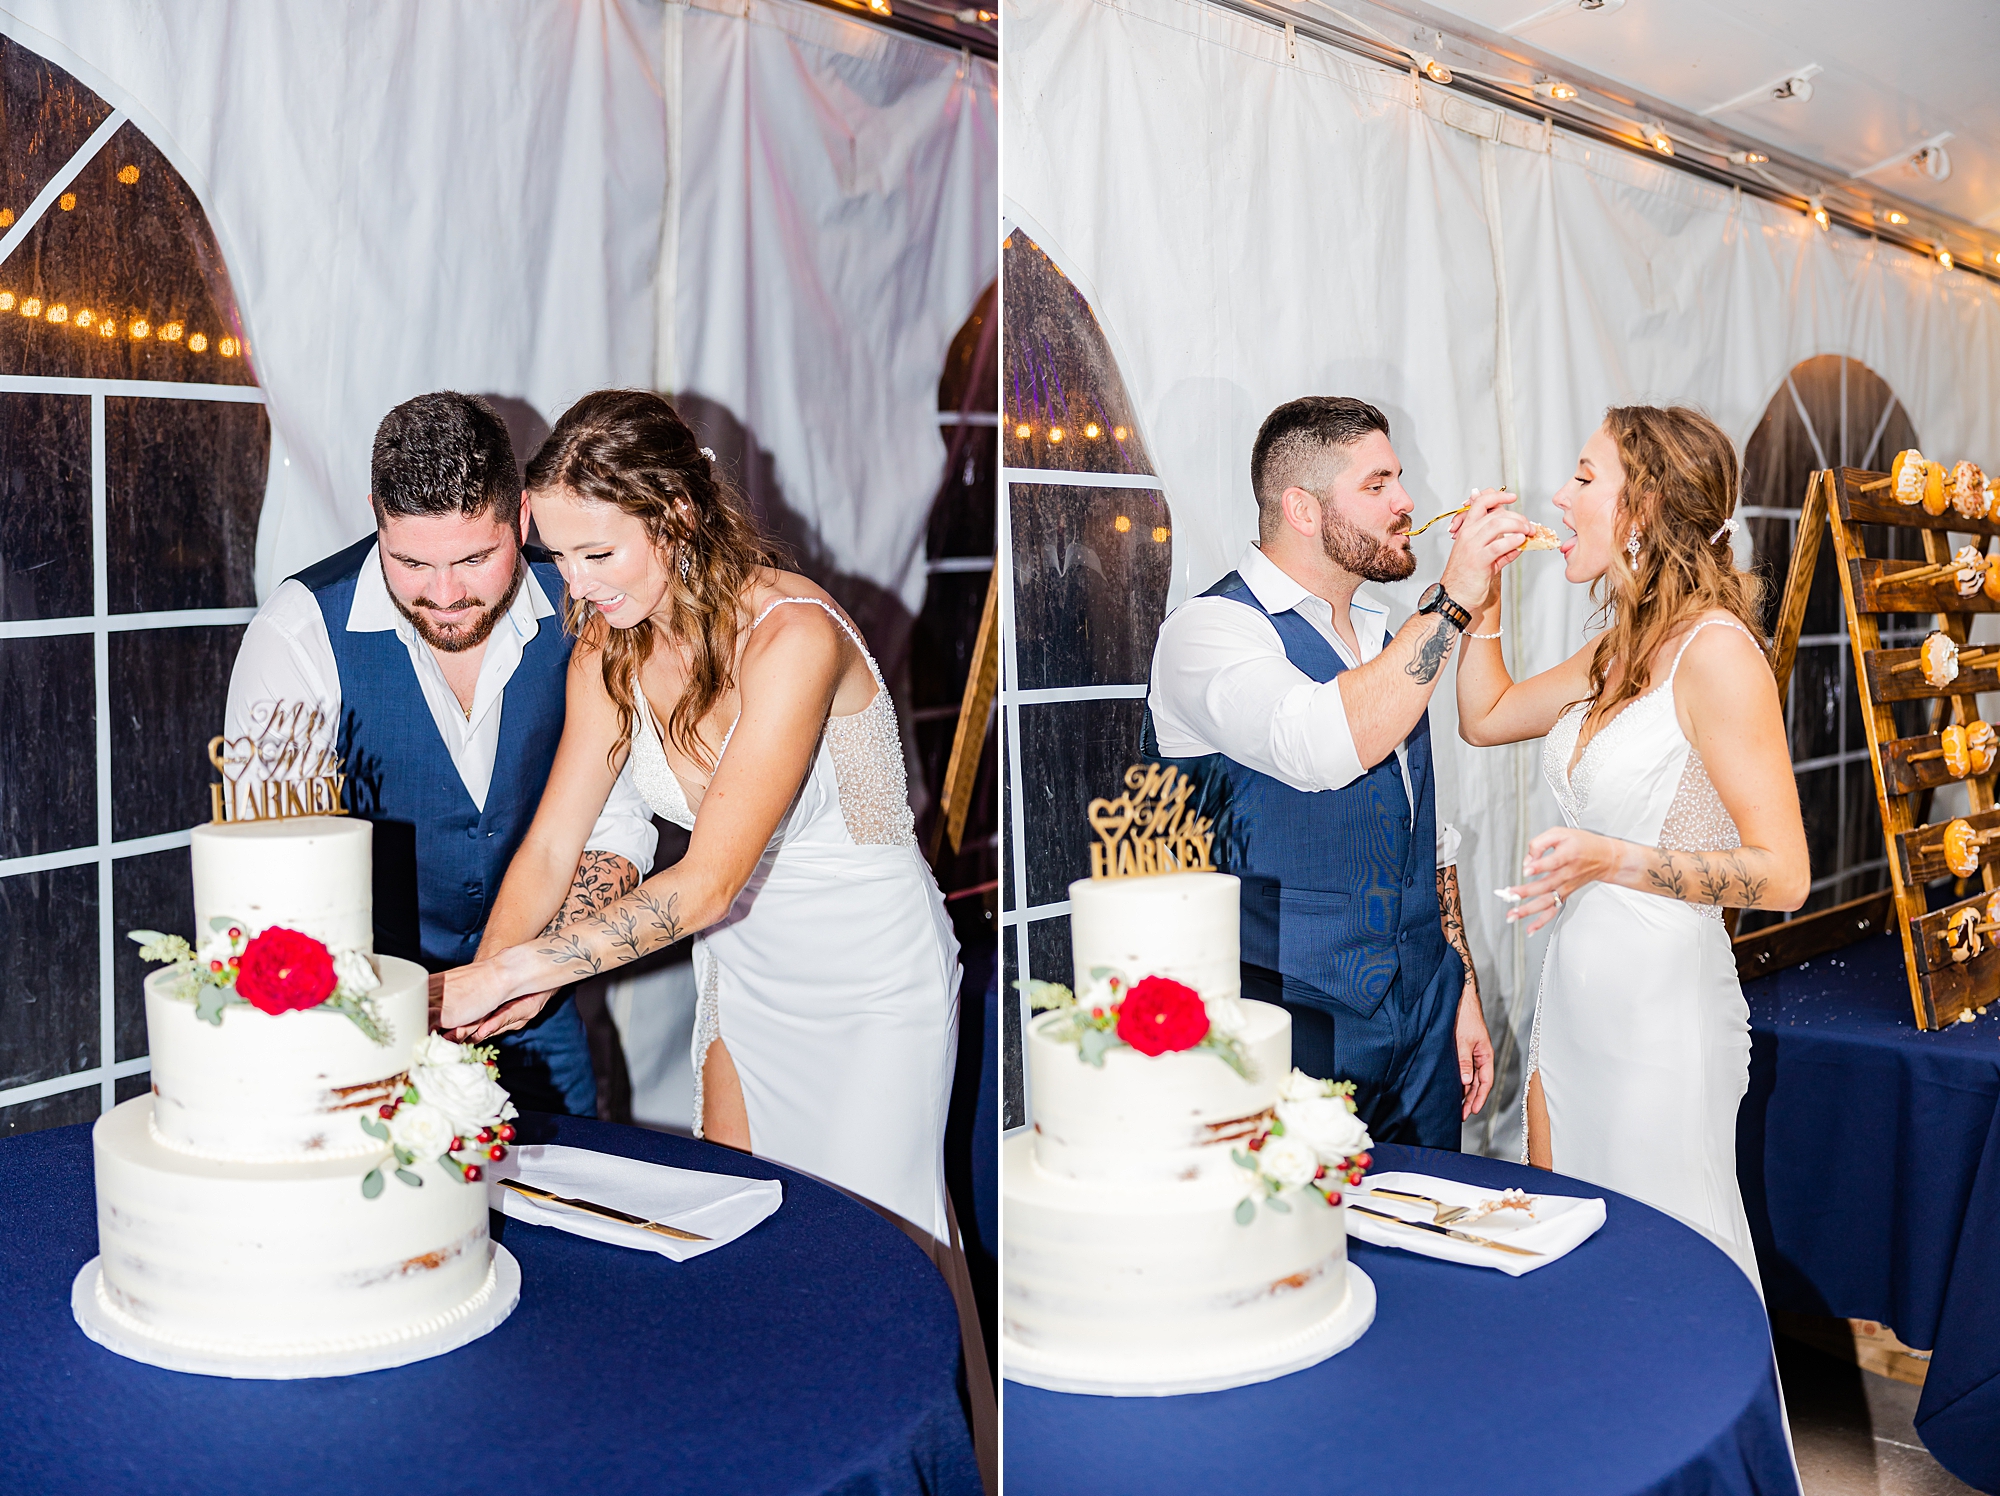 newlyweds cut wedding cake at John's Island reception 